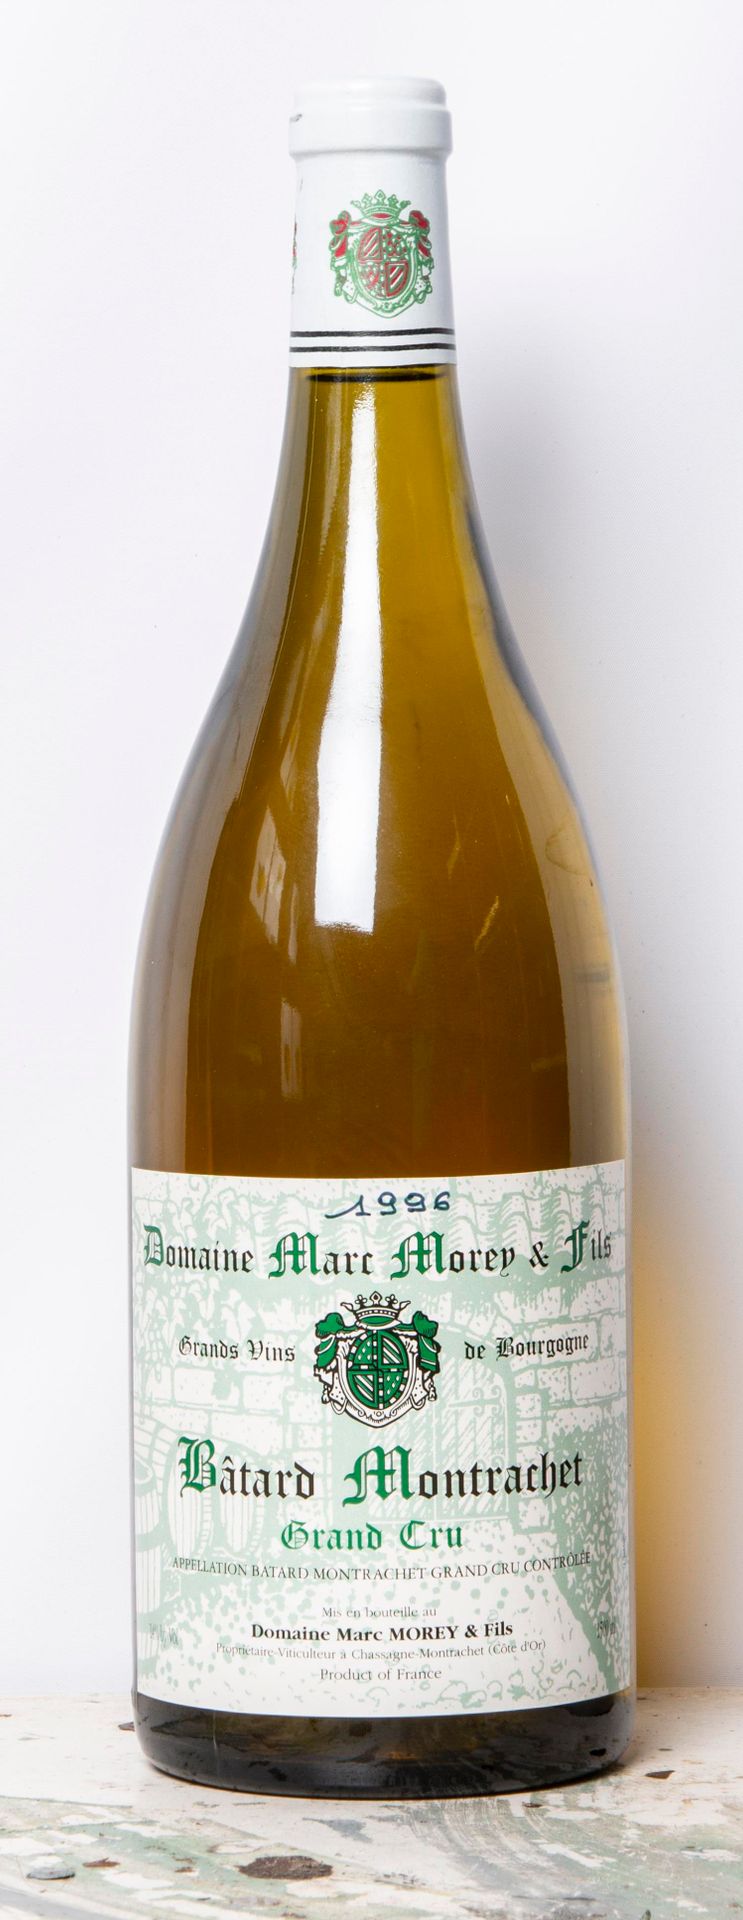 Null Domaine MARC MOREY Bâtard-Montrachet Grand Cru 1996, Burgundy (F)
1 magnum &hellip;